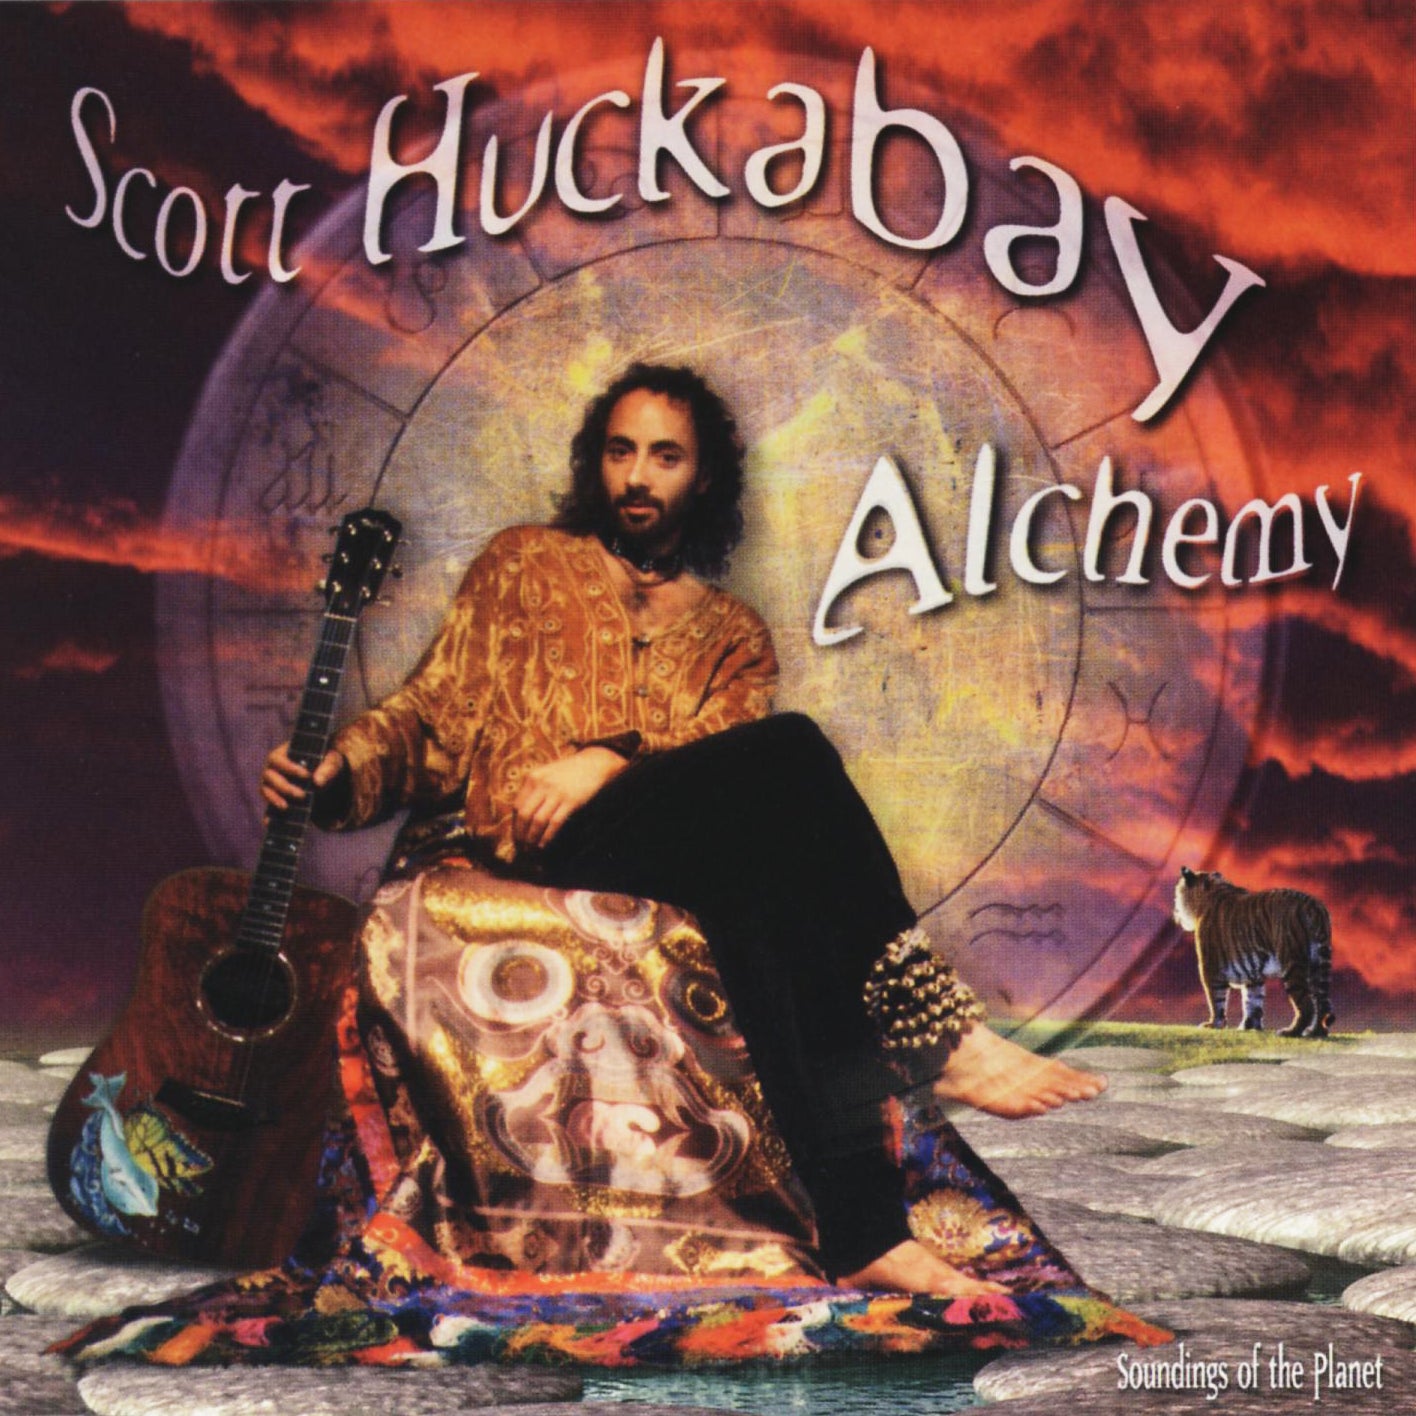 Scott Huckabay Alchemy Soundings of the Planet